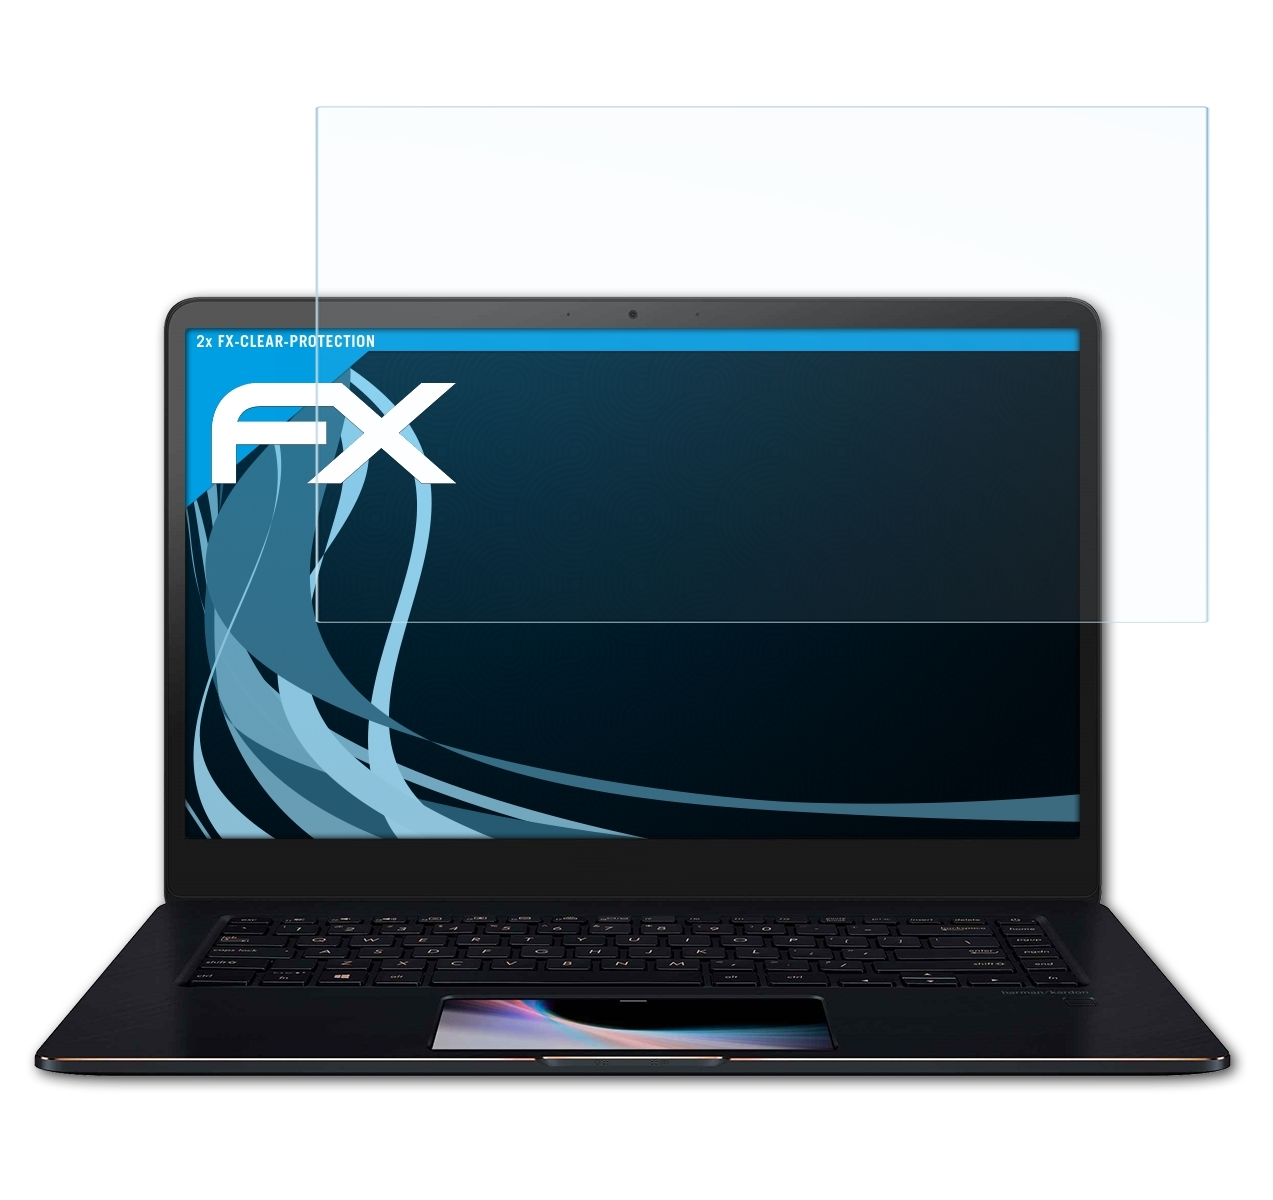 ATFOLIX 2x FX-Clear Displayschutz(für (UX550GD)) 15 Pro ZenBook Asus